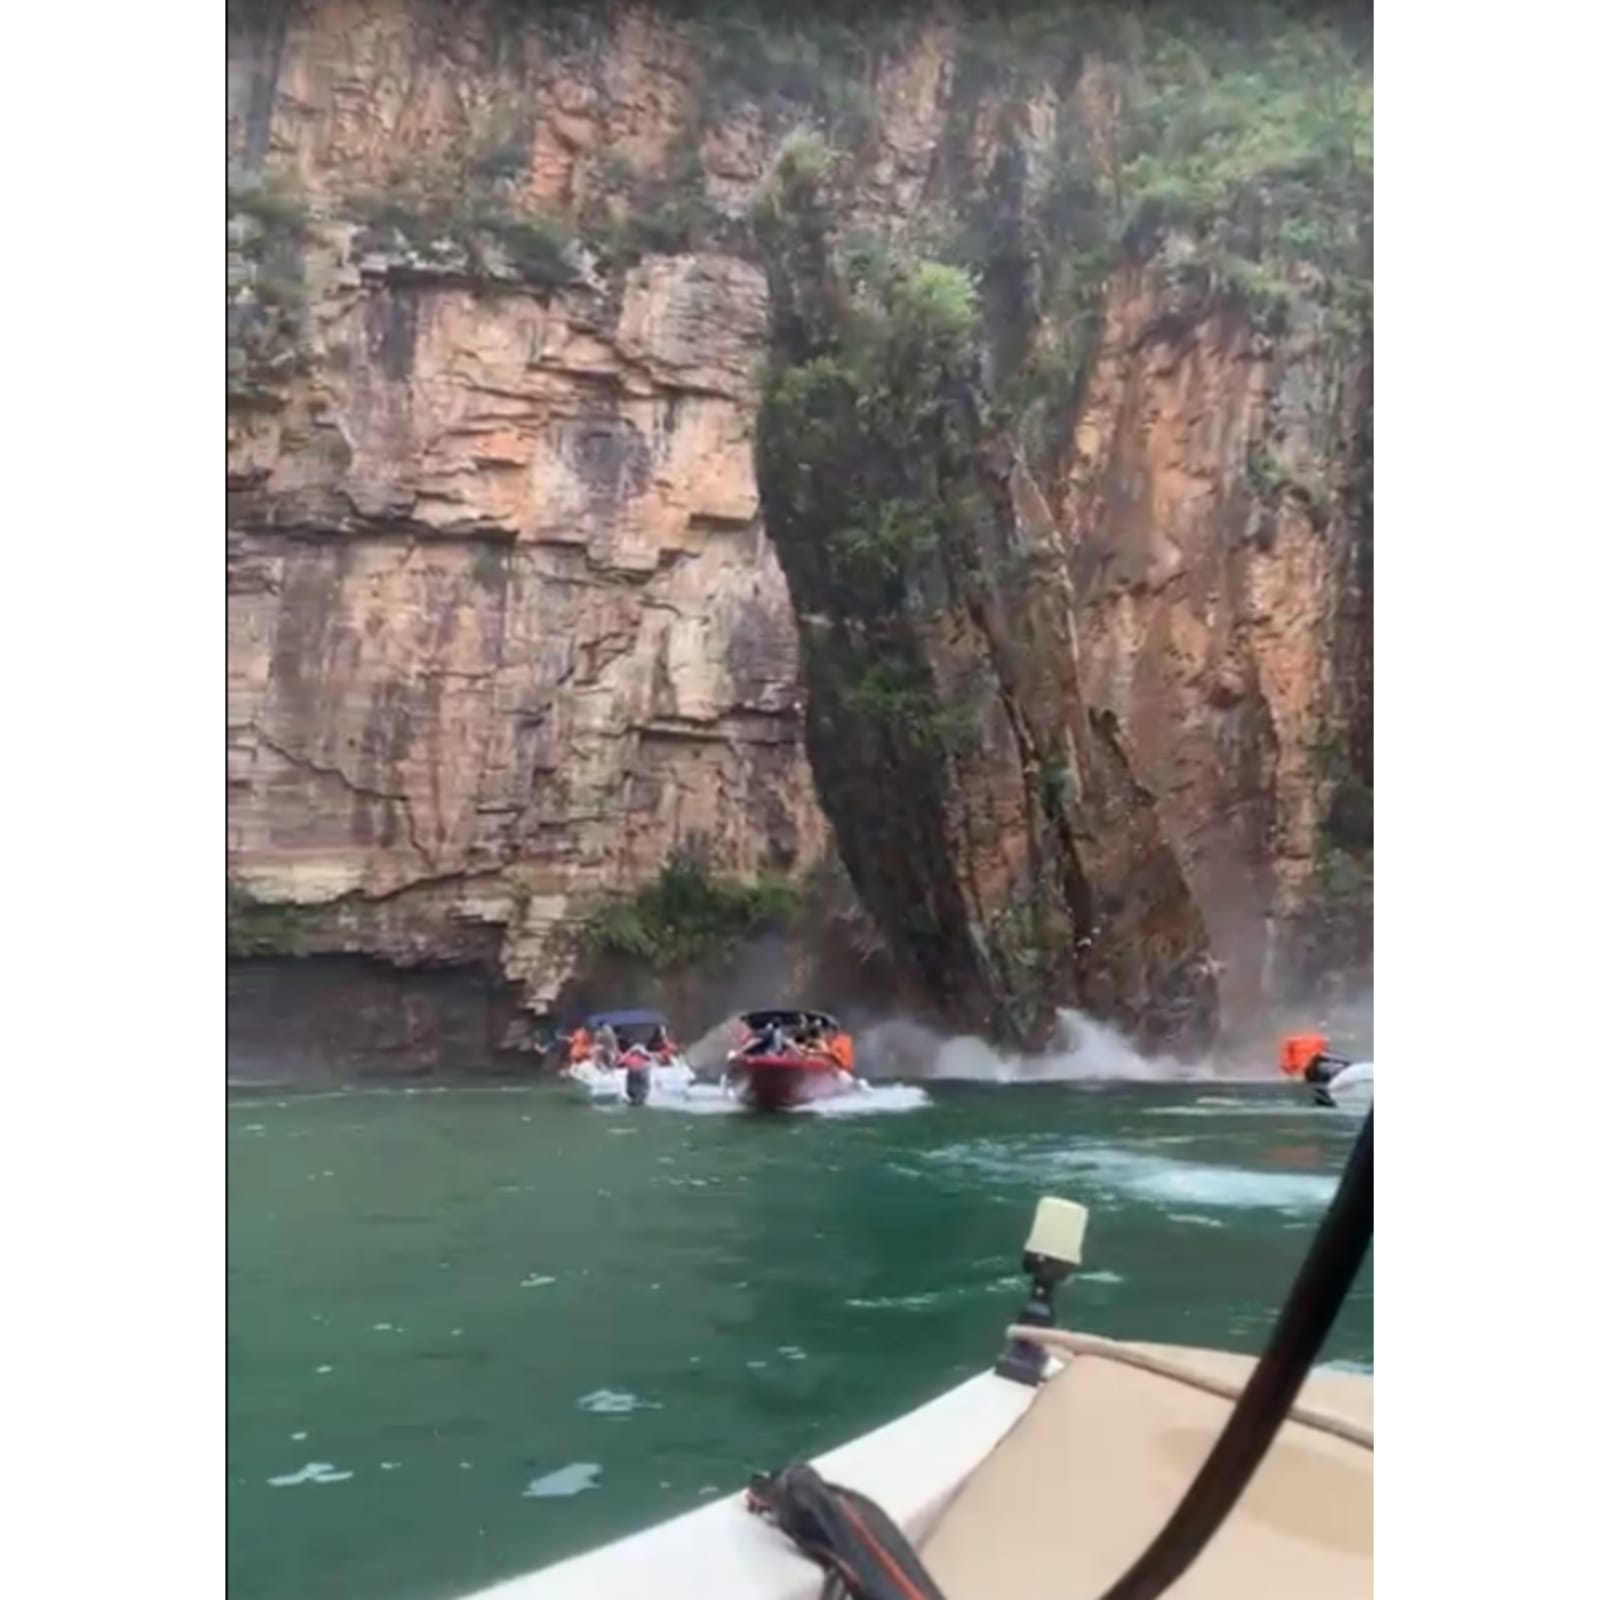 Vídeo: Bloco de Rocha se desprende e cai sobre lanchas e barcos com turistas